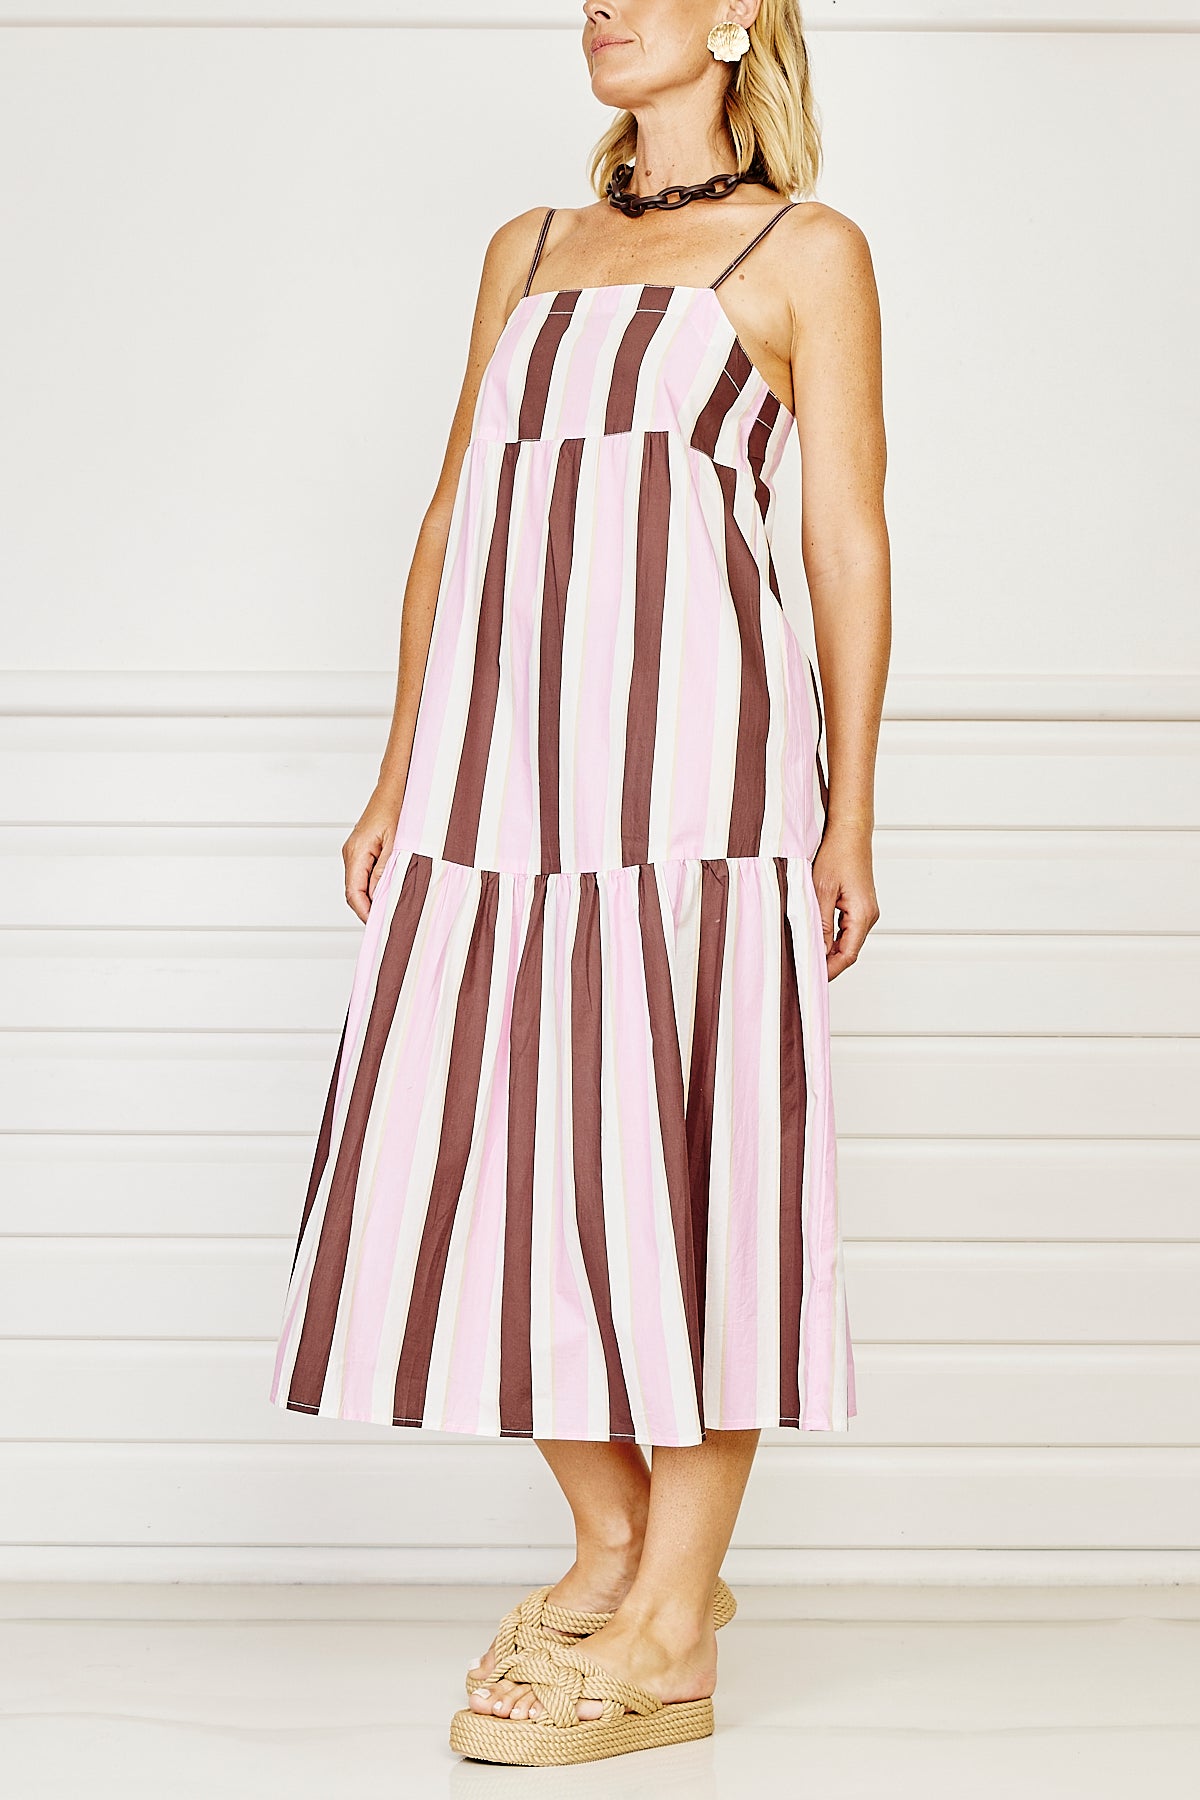 Pondicherry Maxi Sun Dress - Pink & Choc stripe